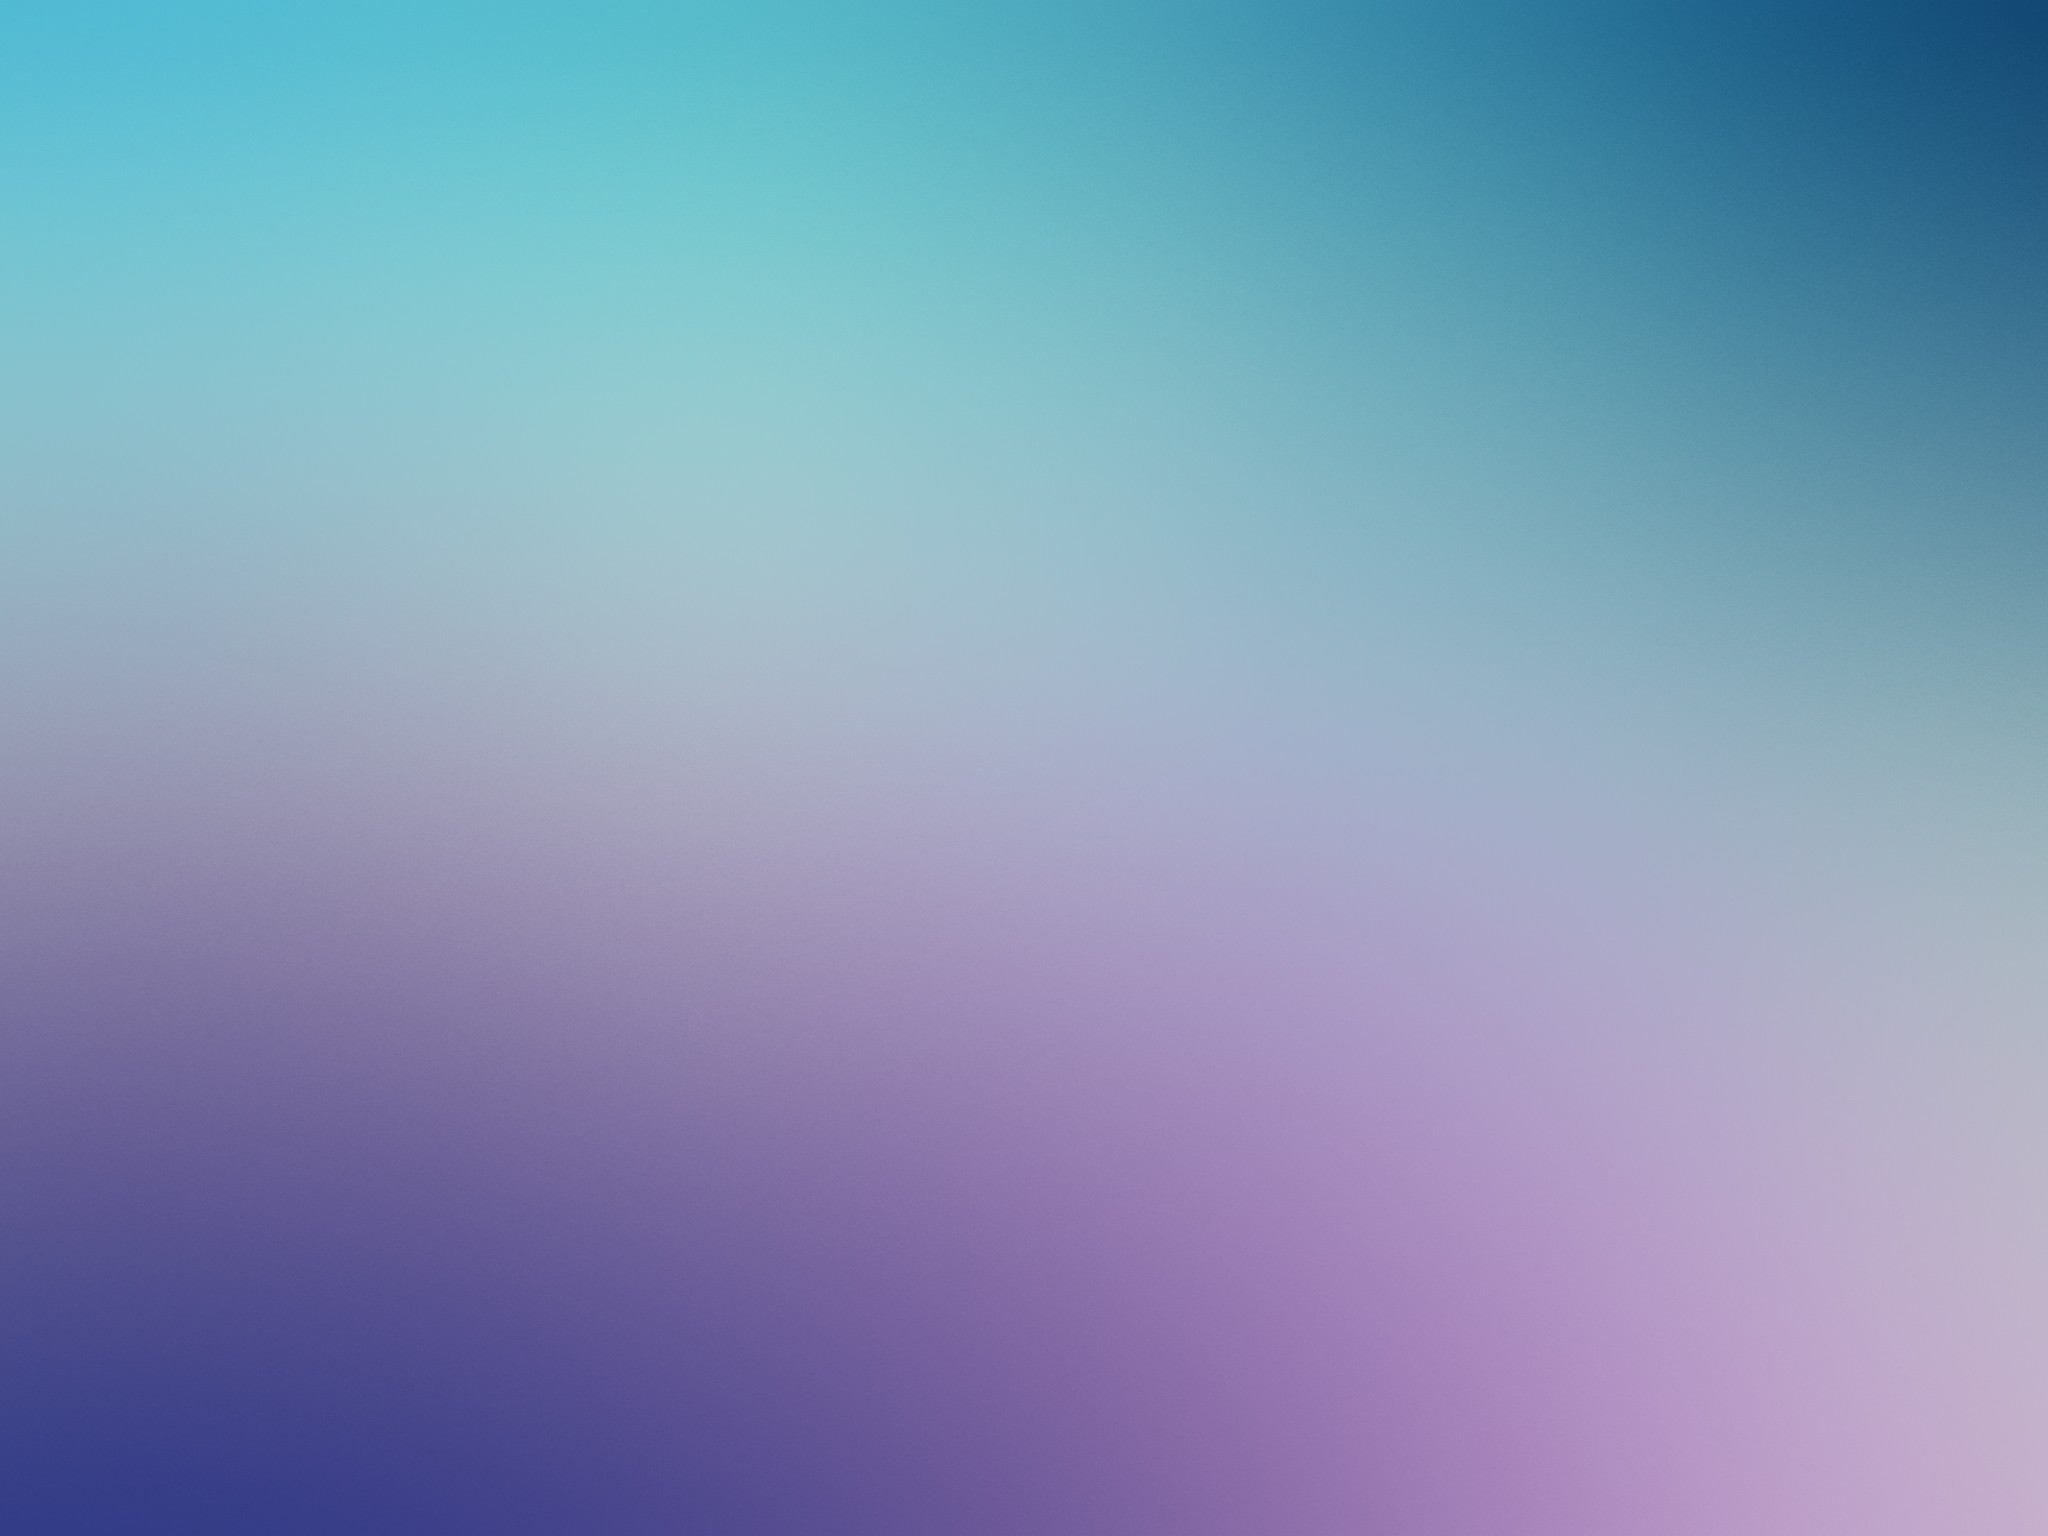 General 2048x1536 gradient blurred minimalism texture simple background digital art